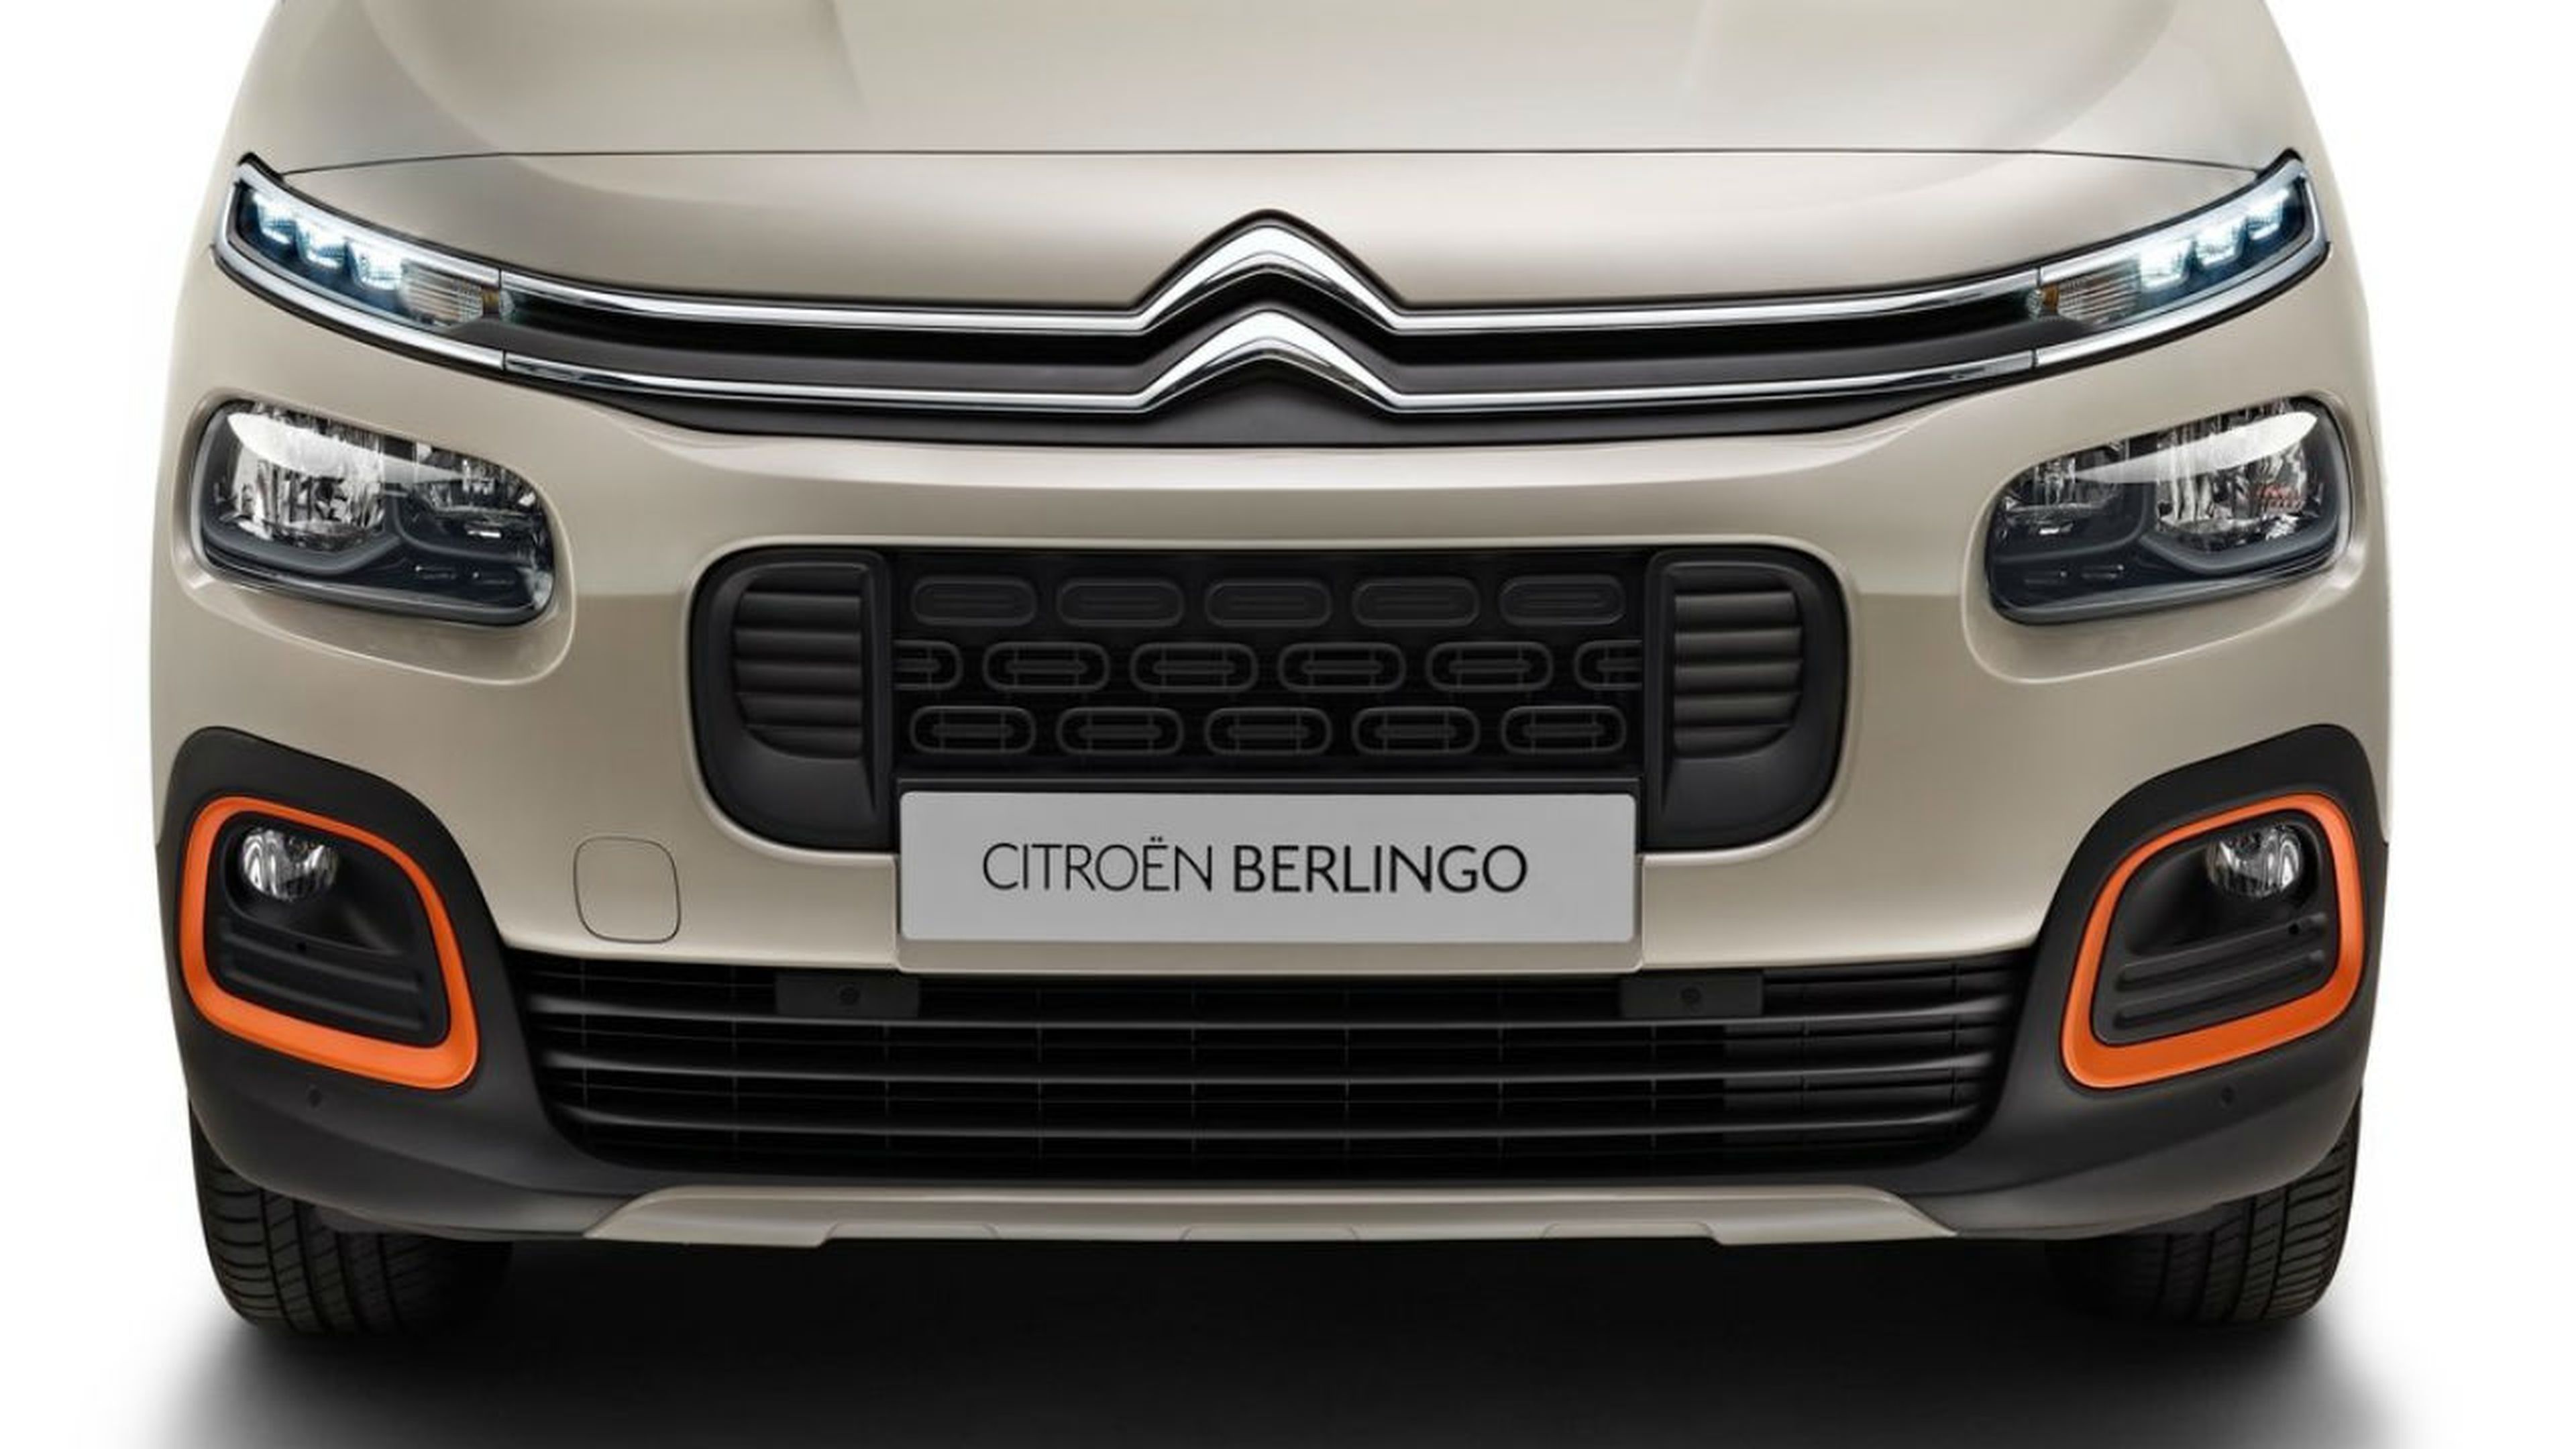 Citroën Berlingo XTR